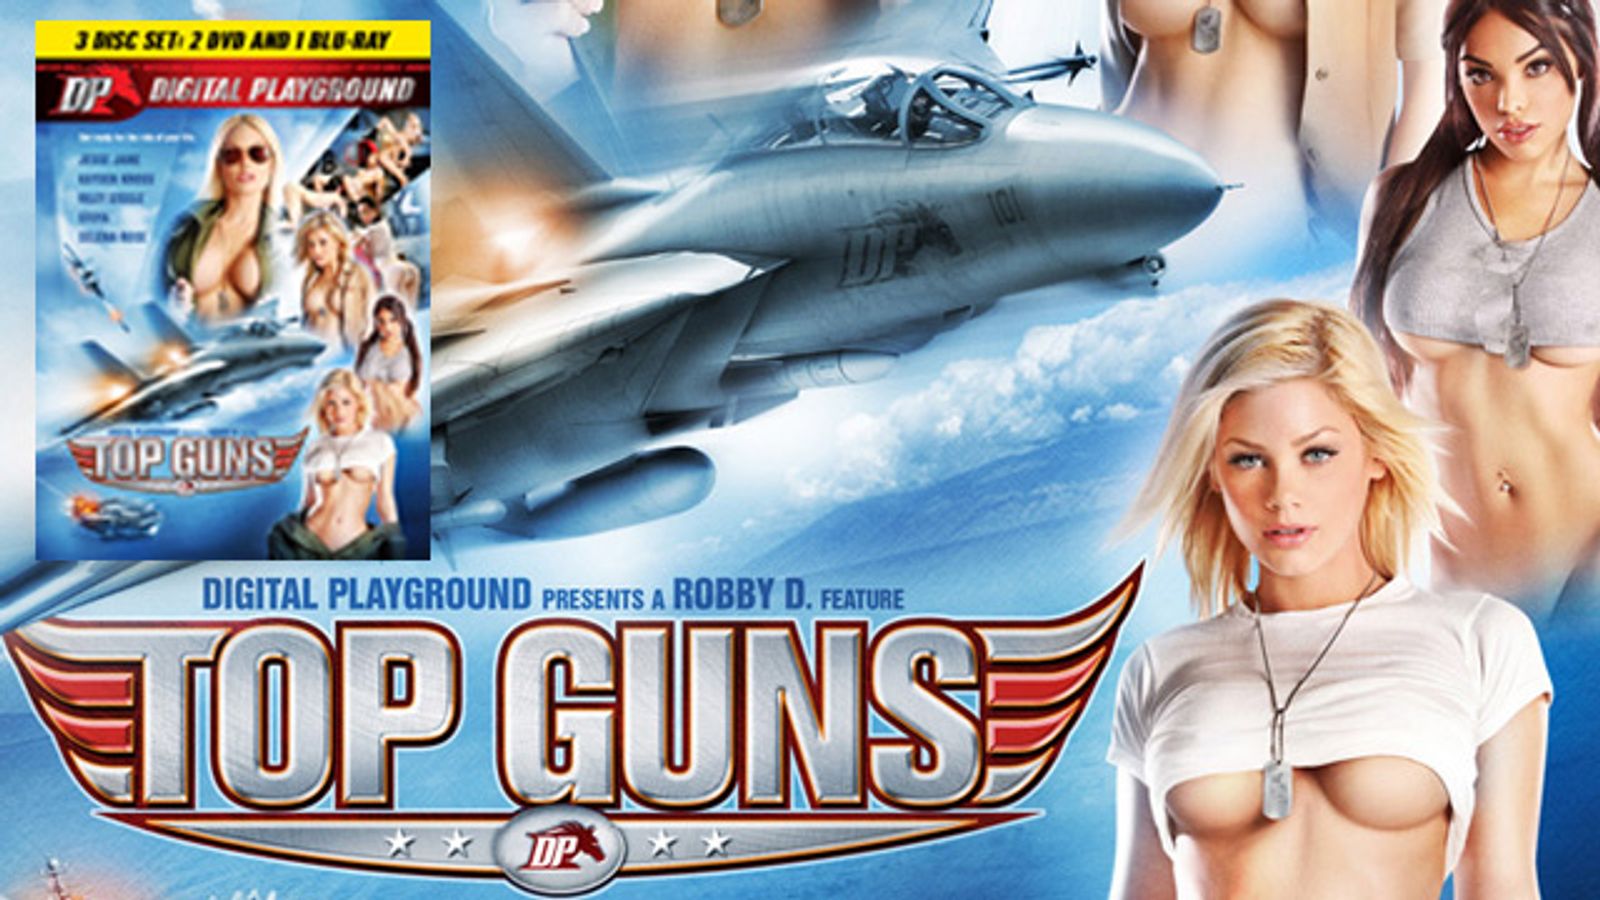 Digital Playground Debuts 'Top Guns' Trailer at AEE